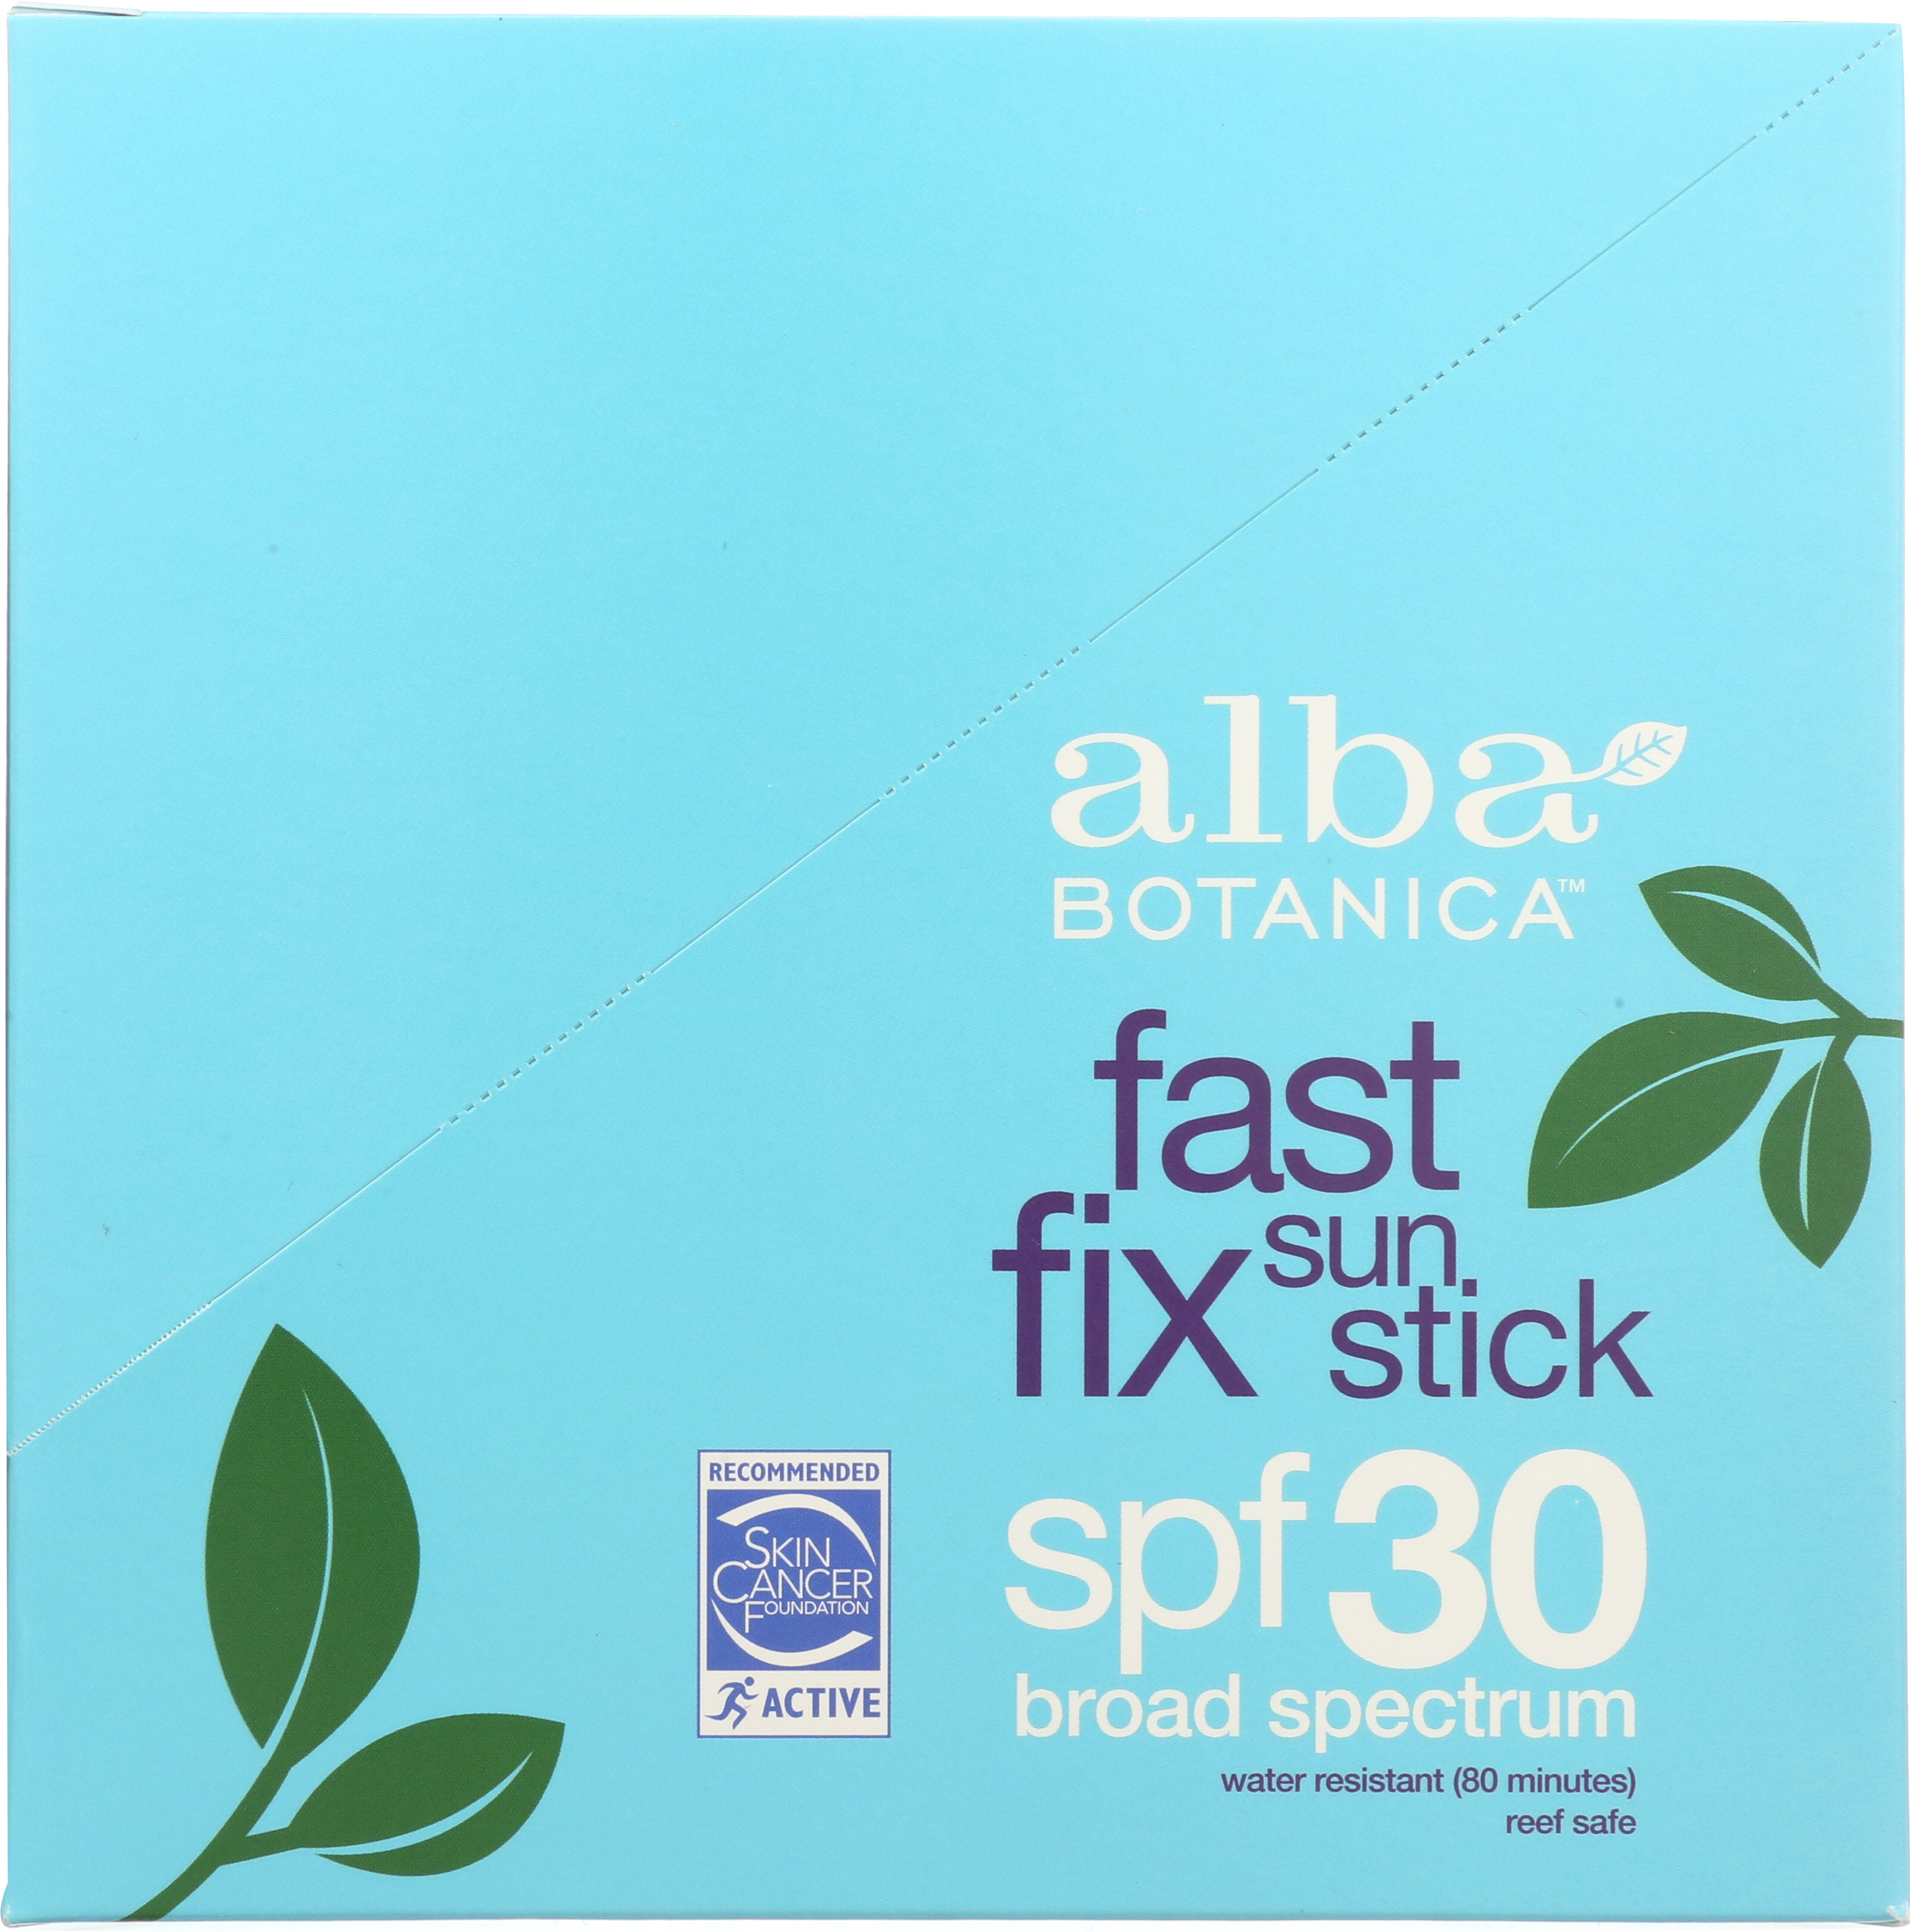 Alba Botanica Fast Fix Sun Stick Sunscreen SPF 30, 0.5 oz - image 4 of 7